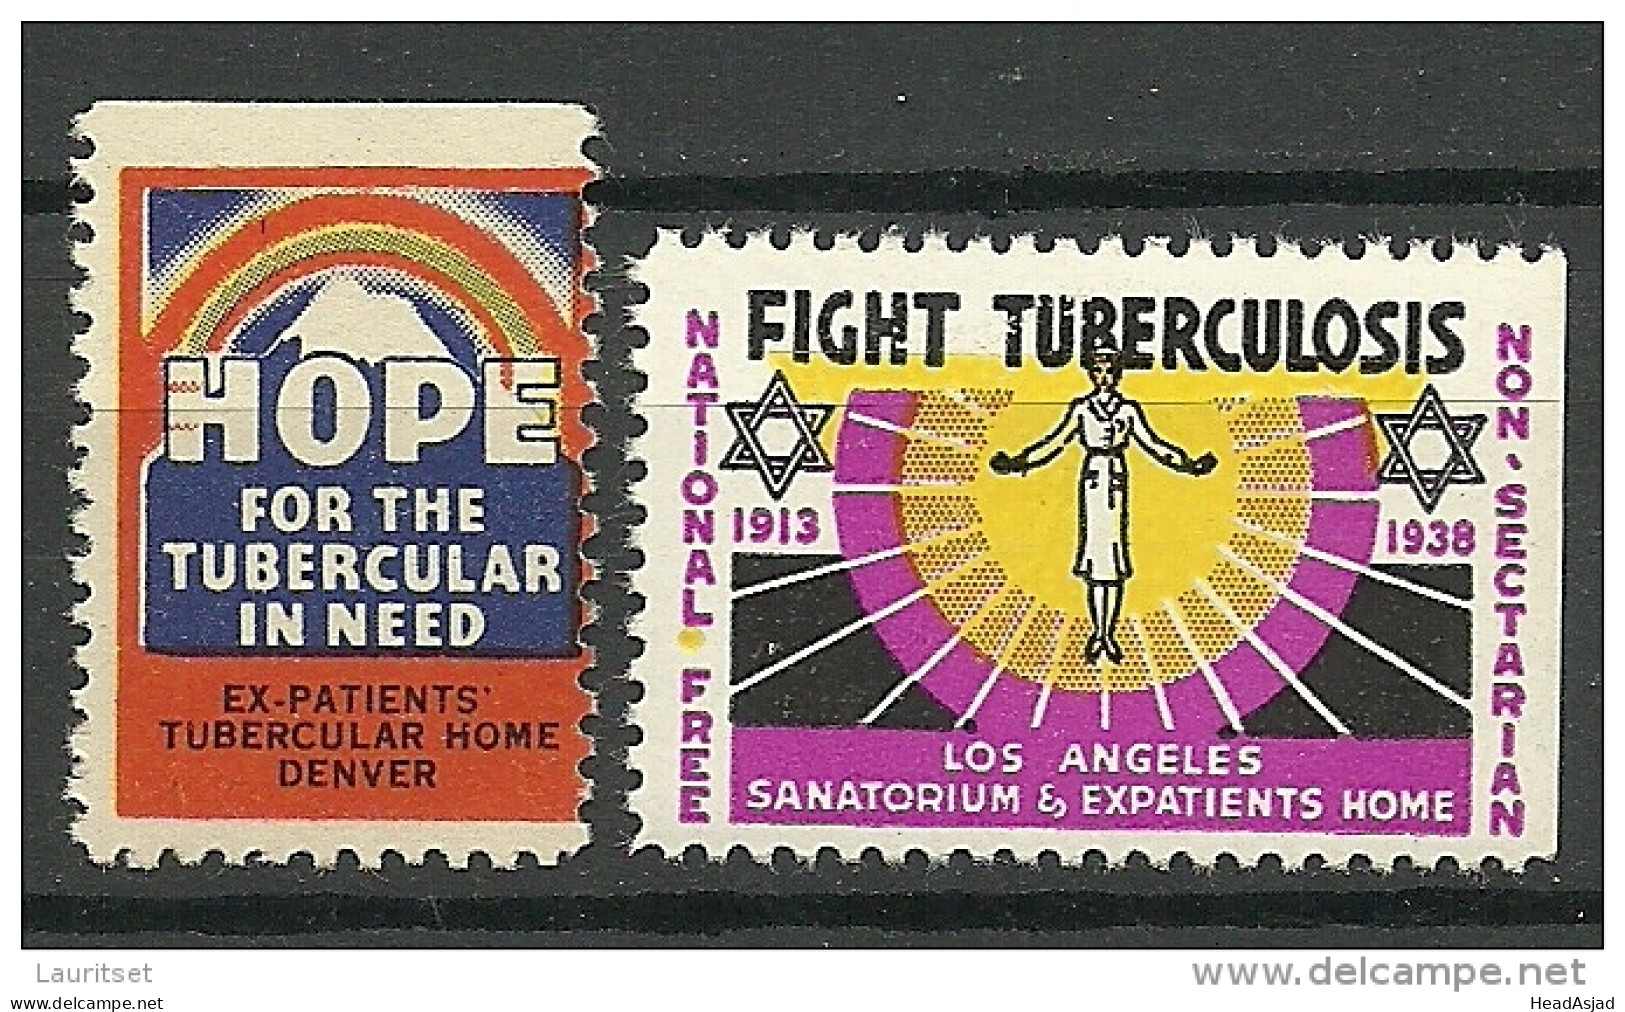 USA 1930ies Vignettes Propaganda Stamps Against Tuberculose Tuberkulosis MNH - Disease